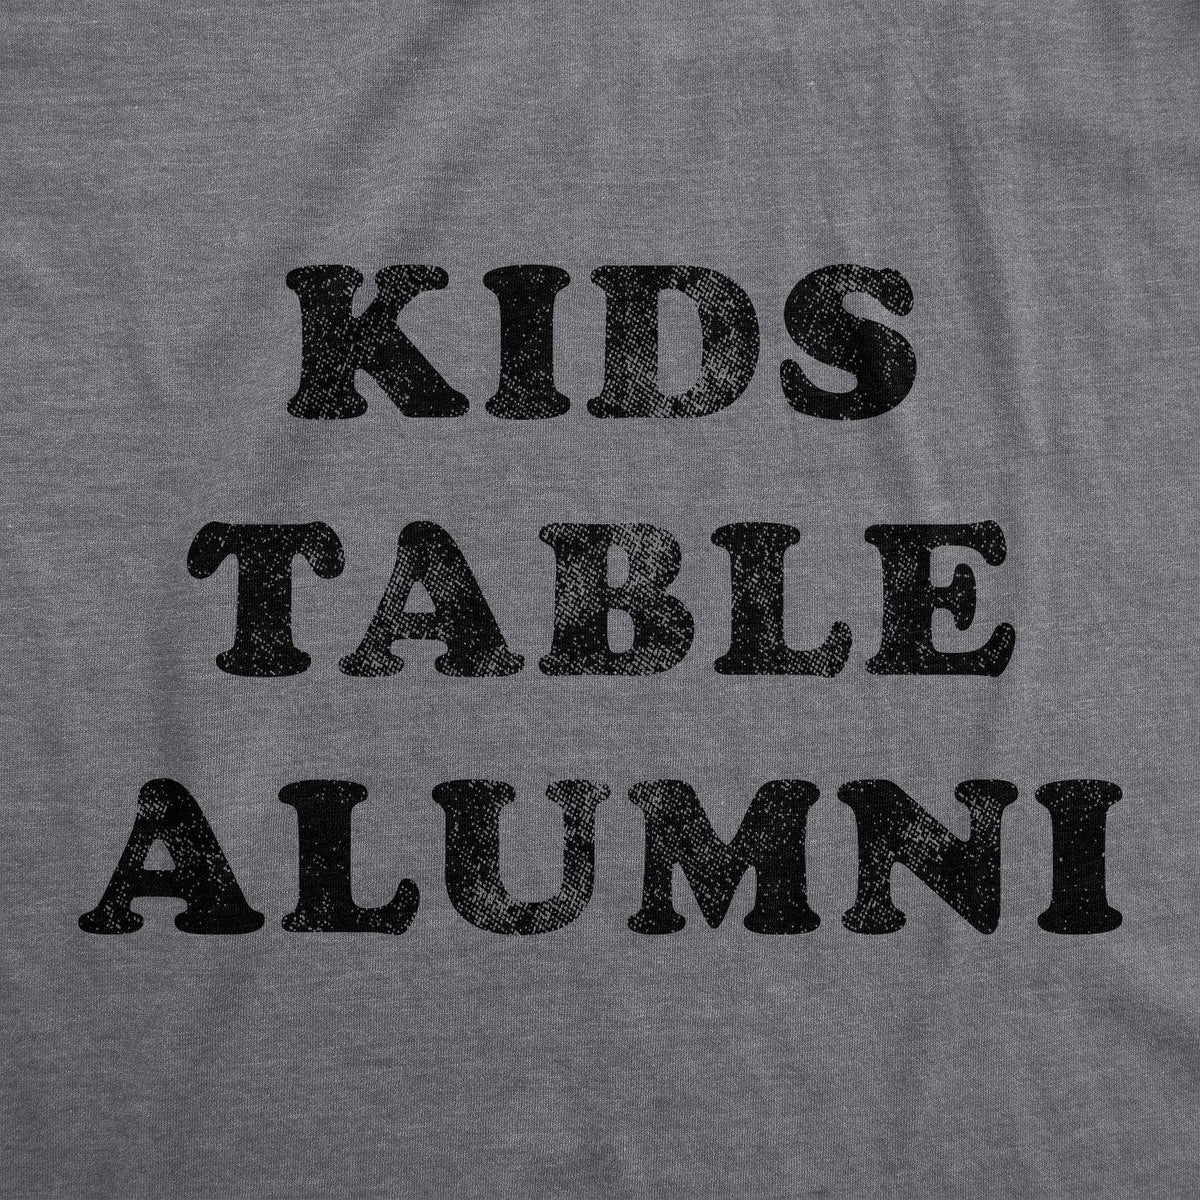 Kids Table Alumni Women&#39;s Tshirt - Crazy Dog T-Shirts